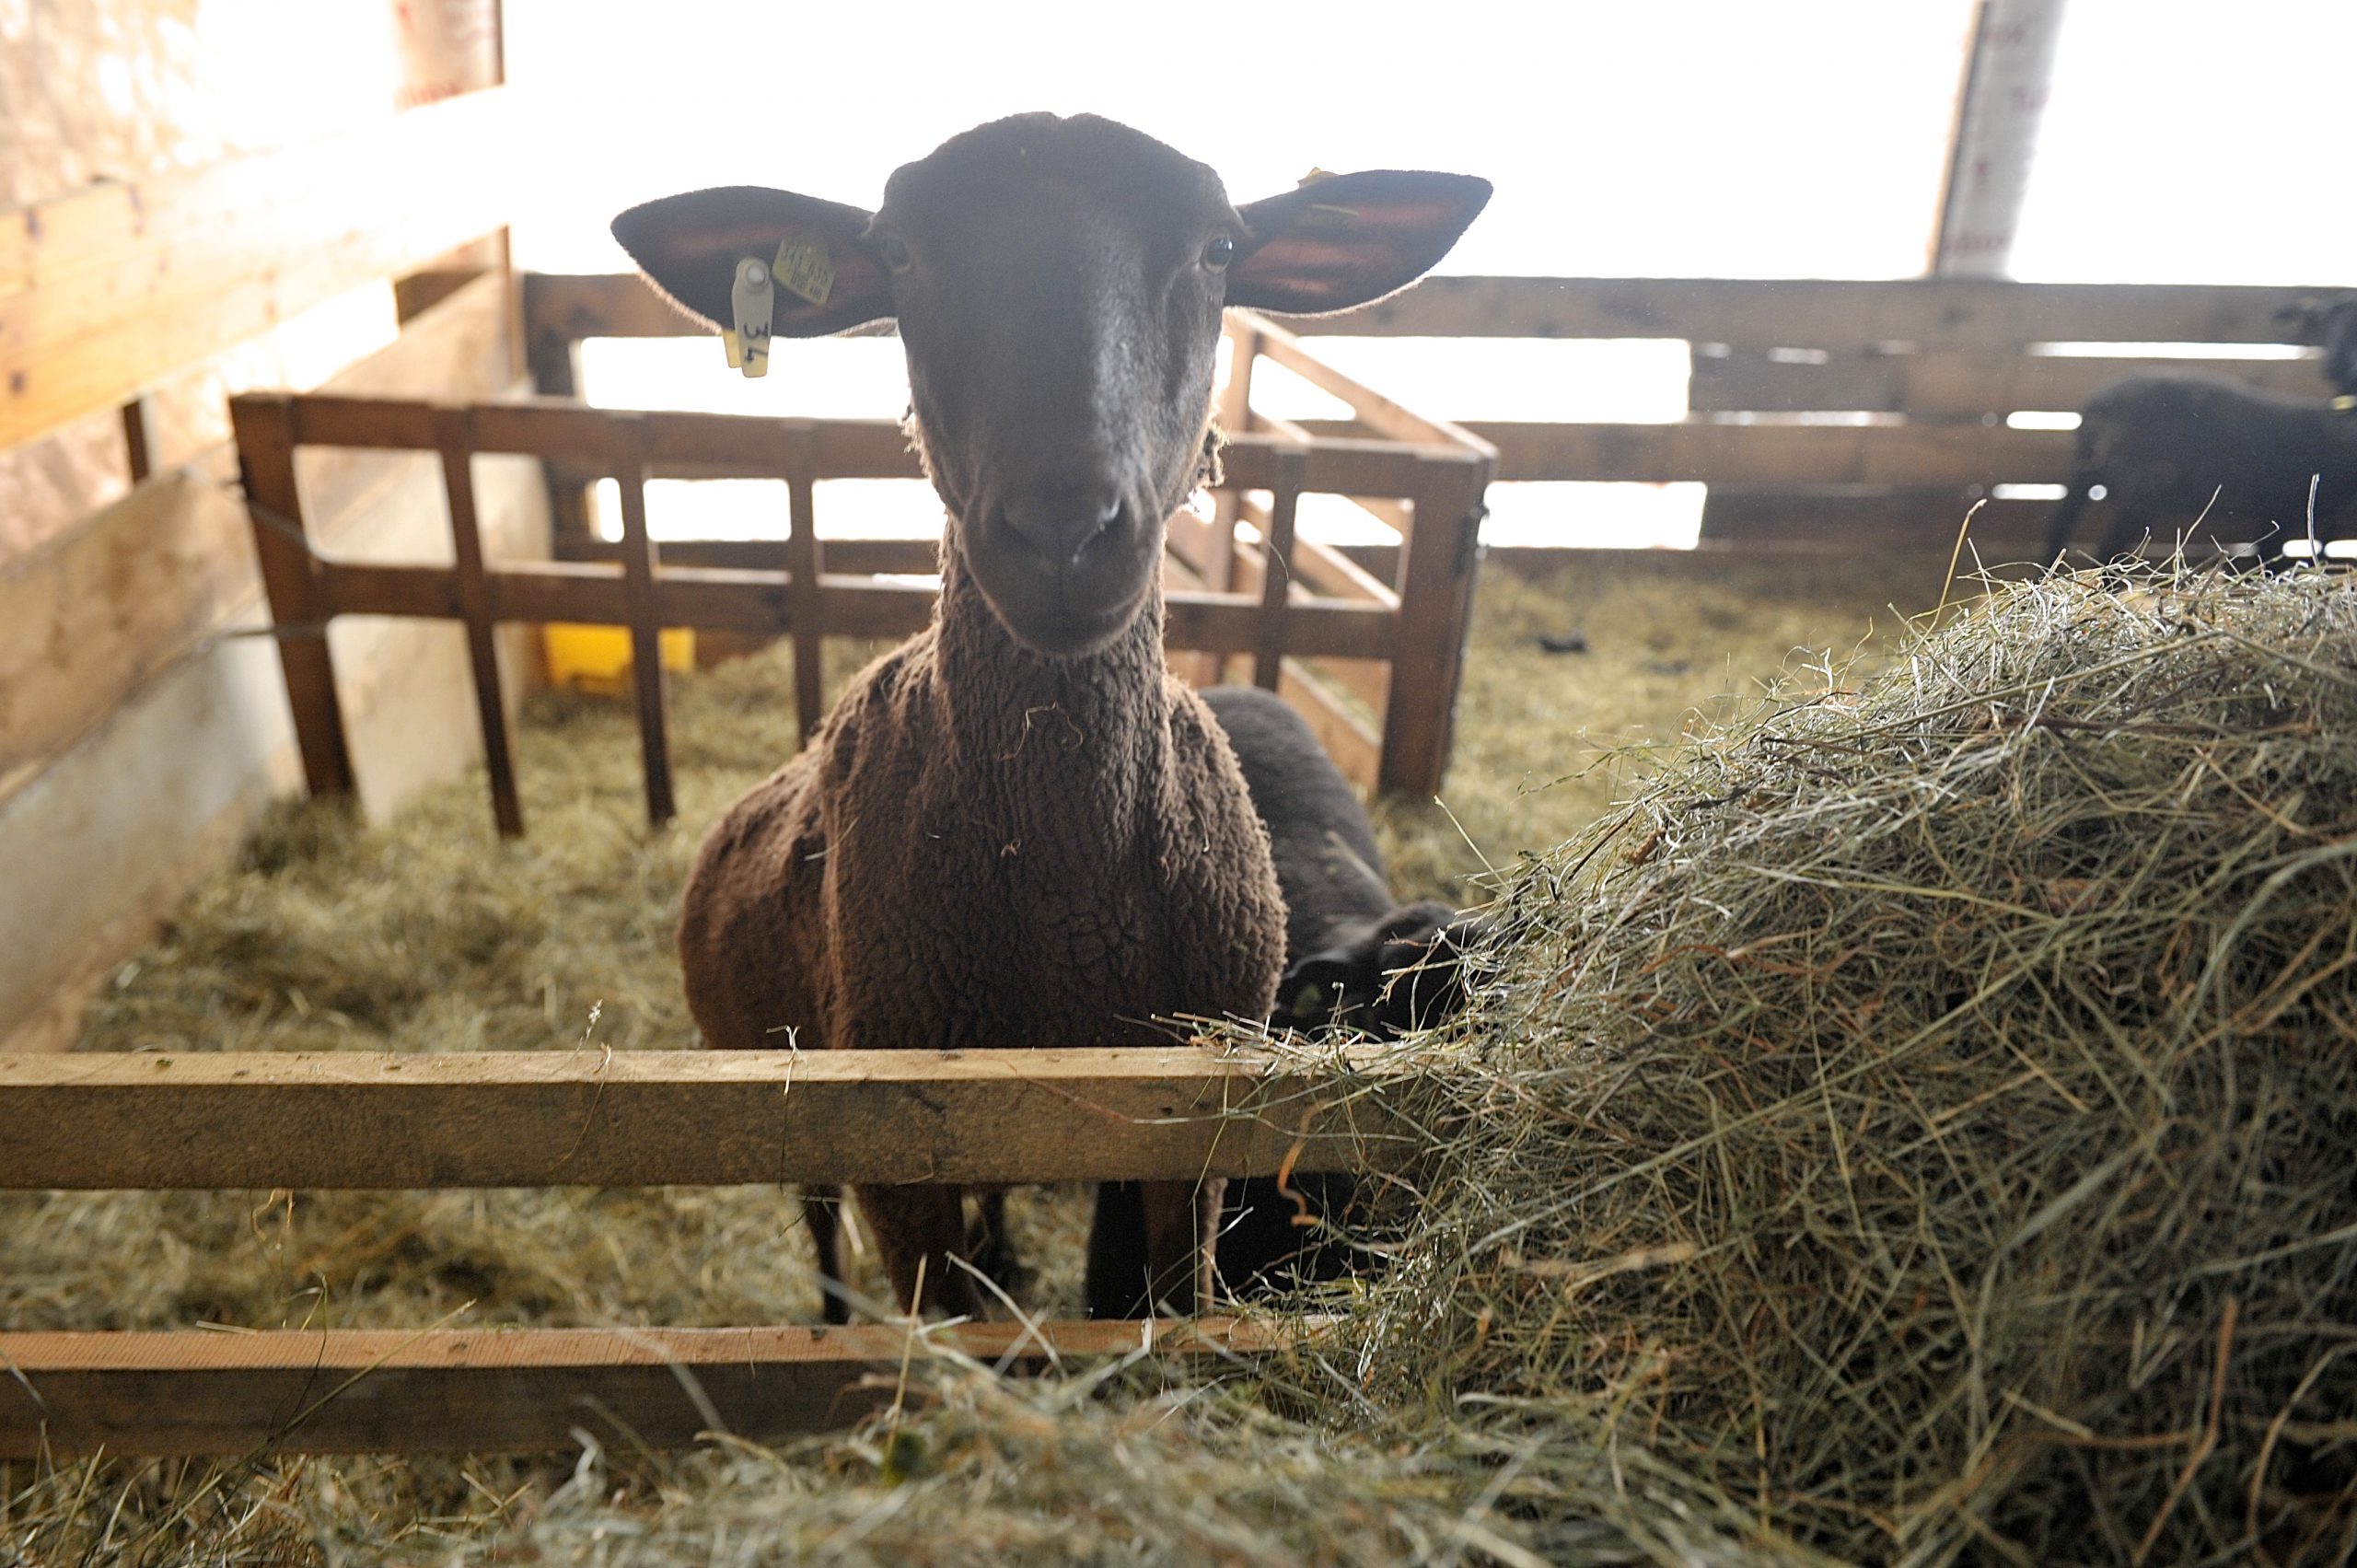 Schaf im Stall beim Heu fressen